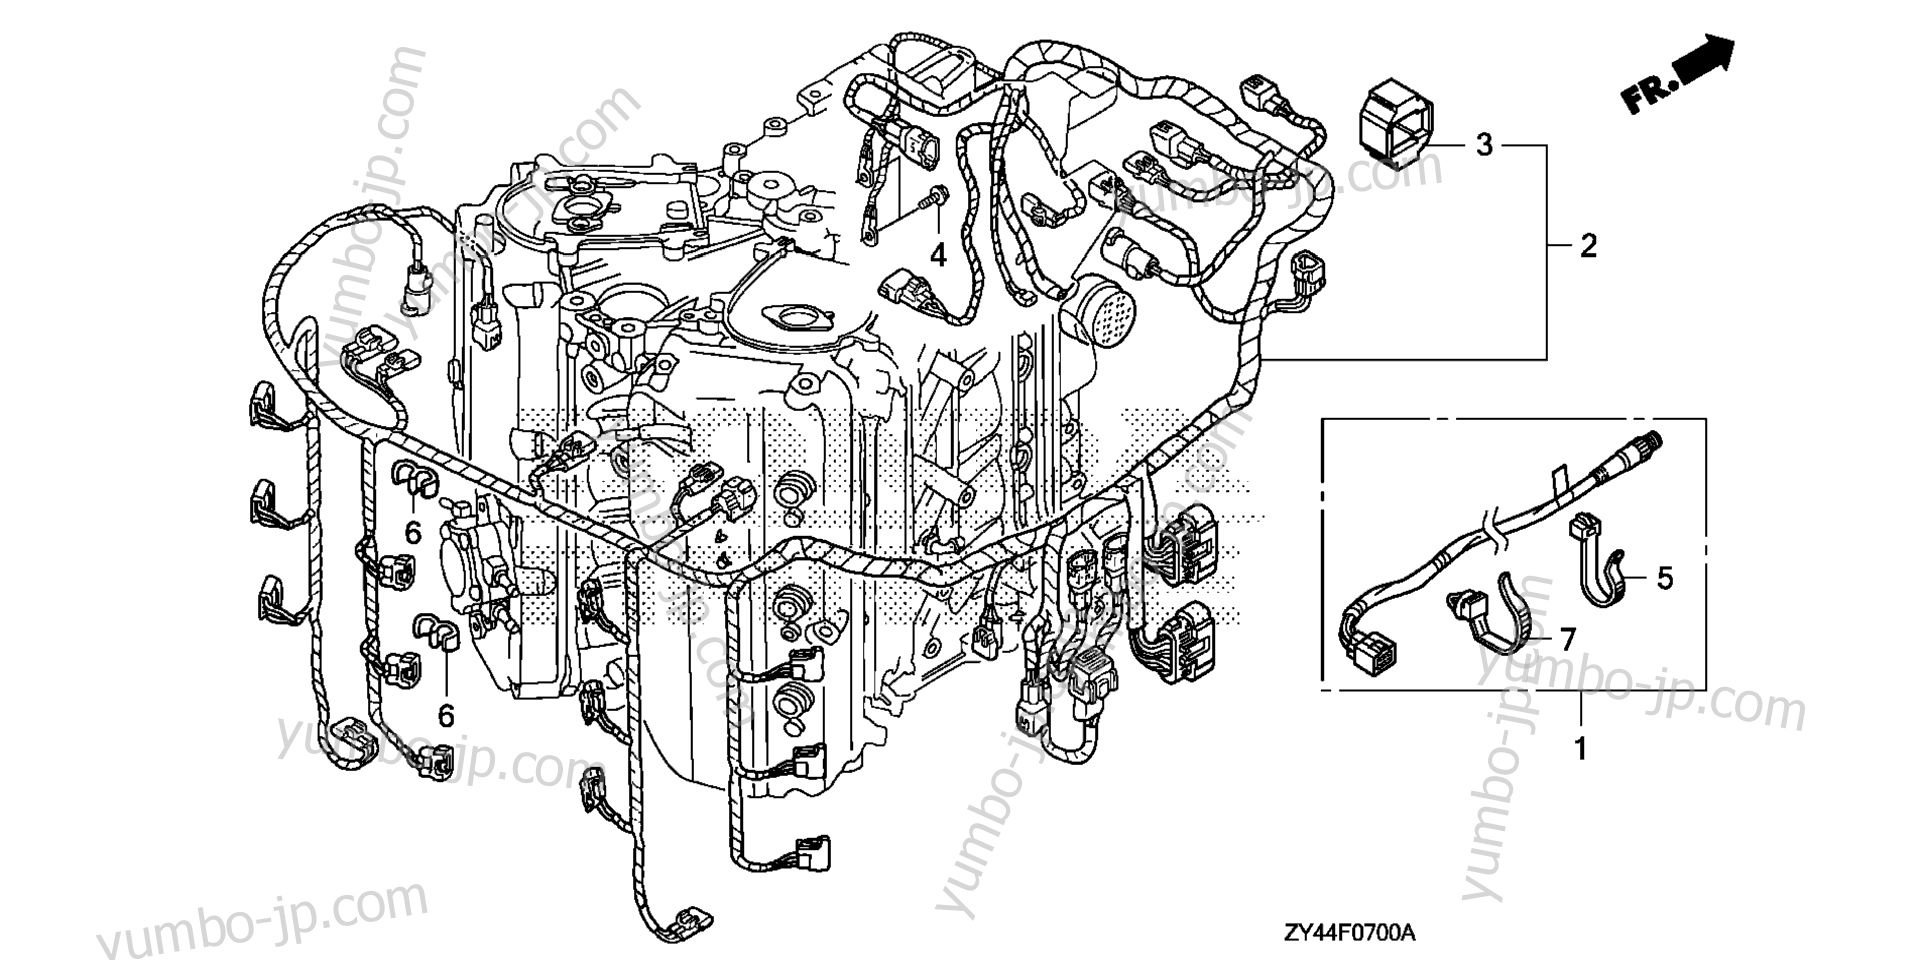 Проводка для стационарных двигателей HONDA BF225AK1 XA 